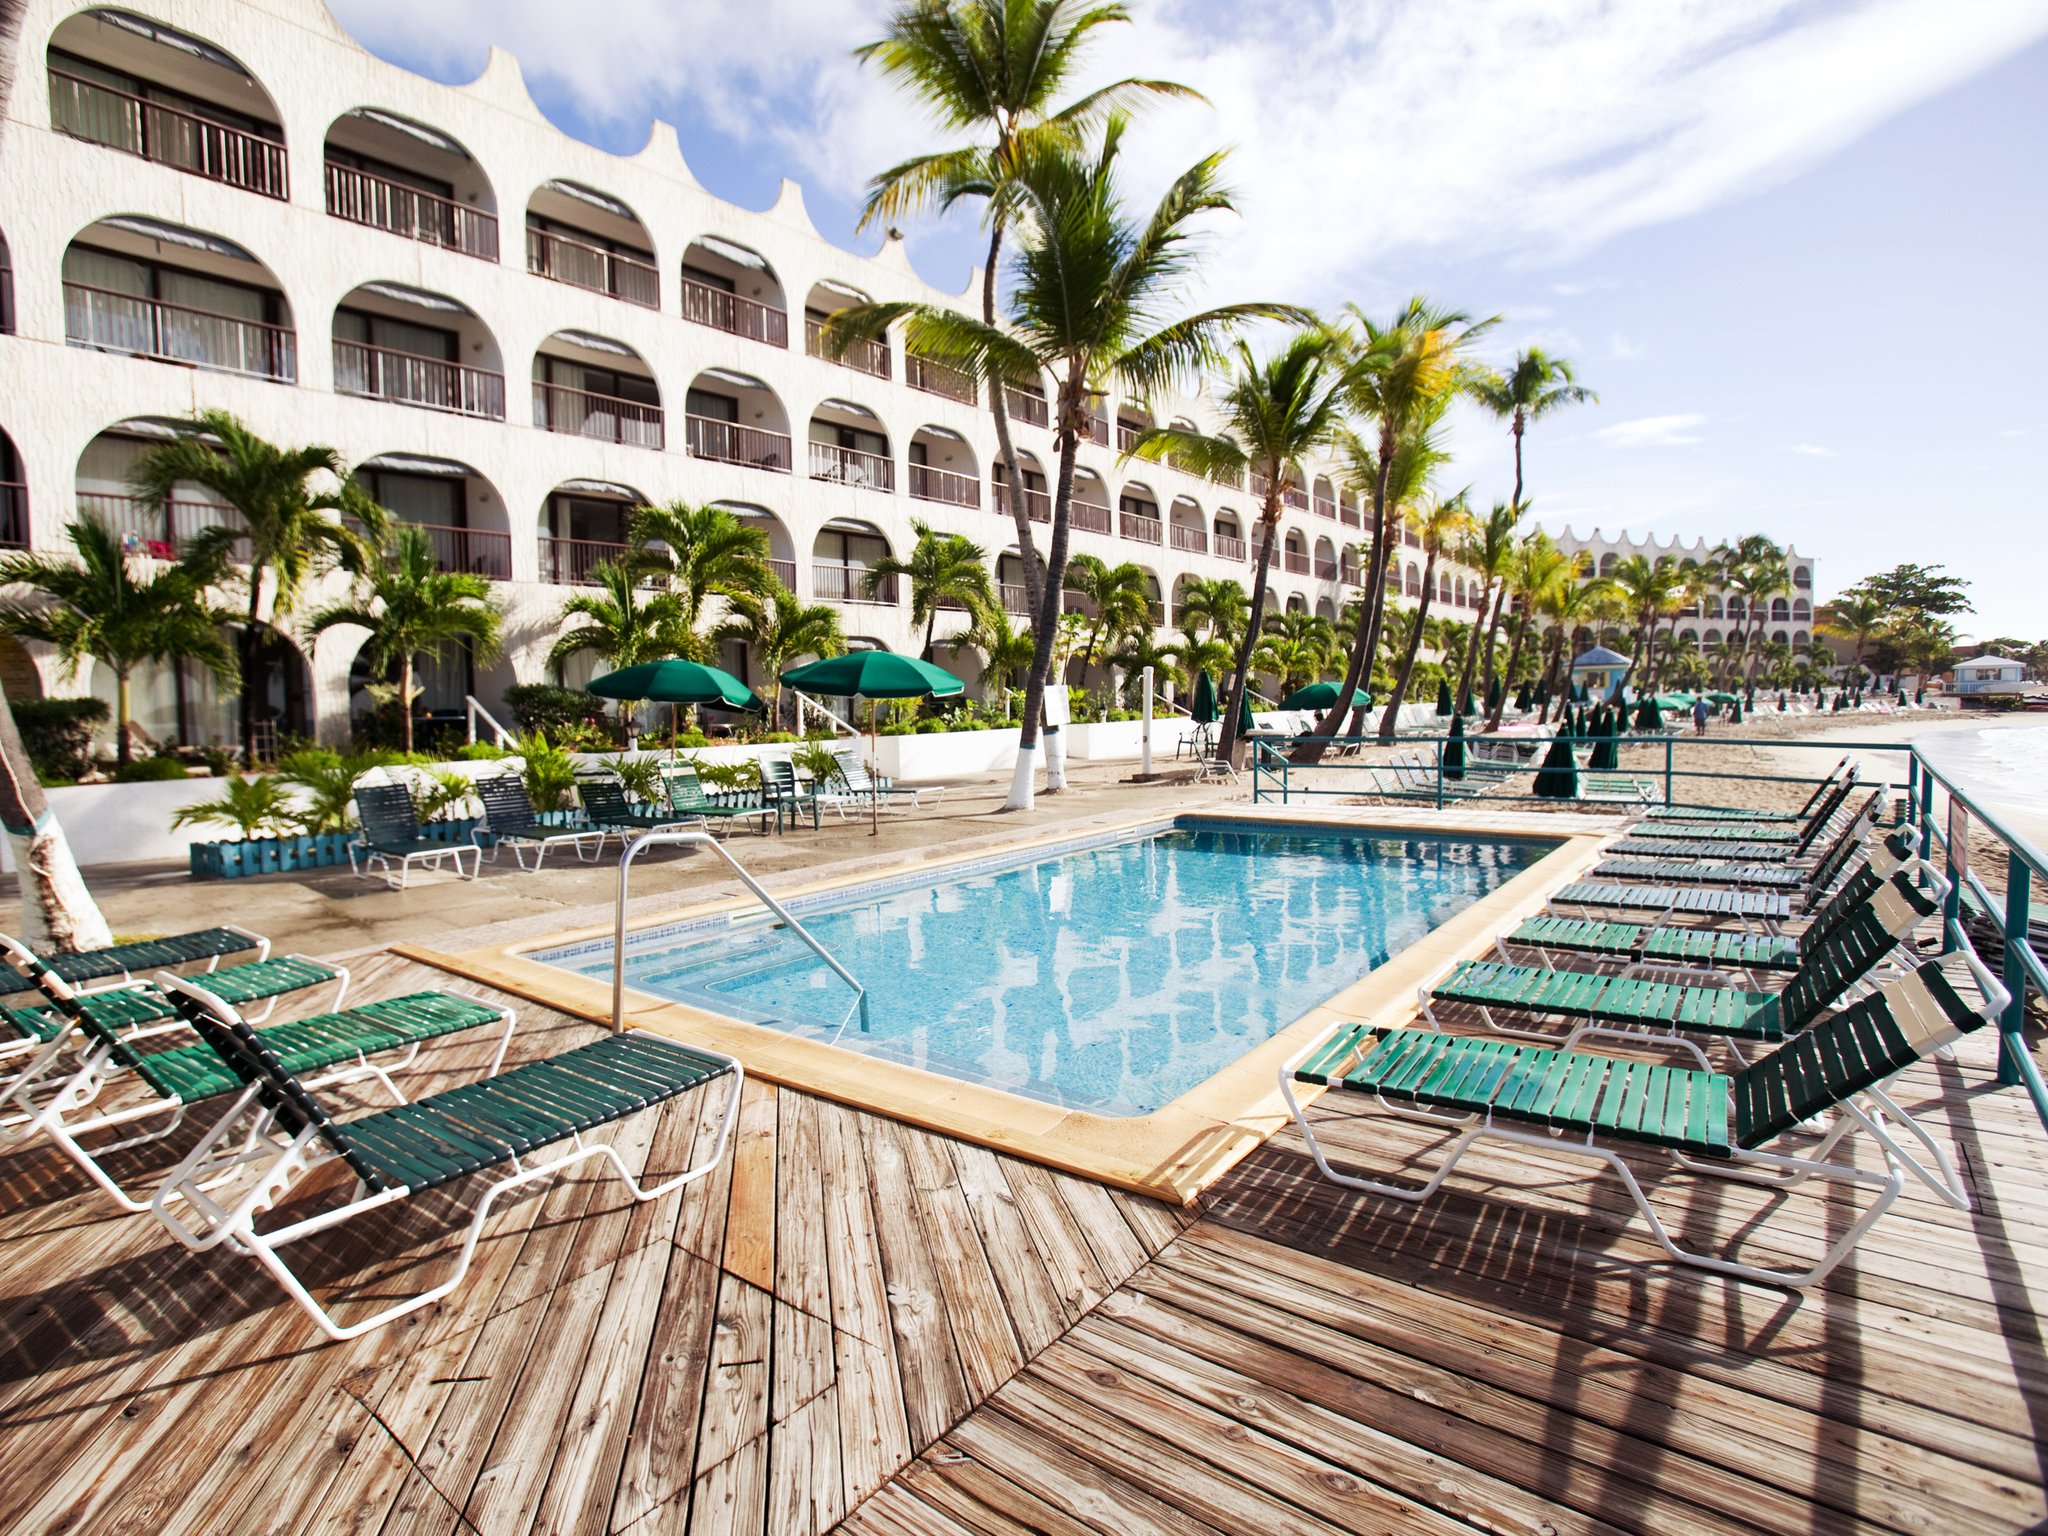 belair beach hotel